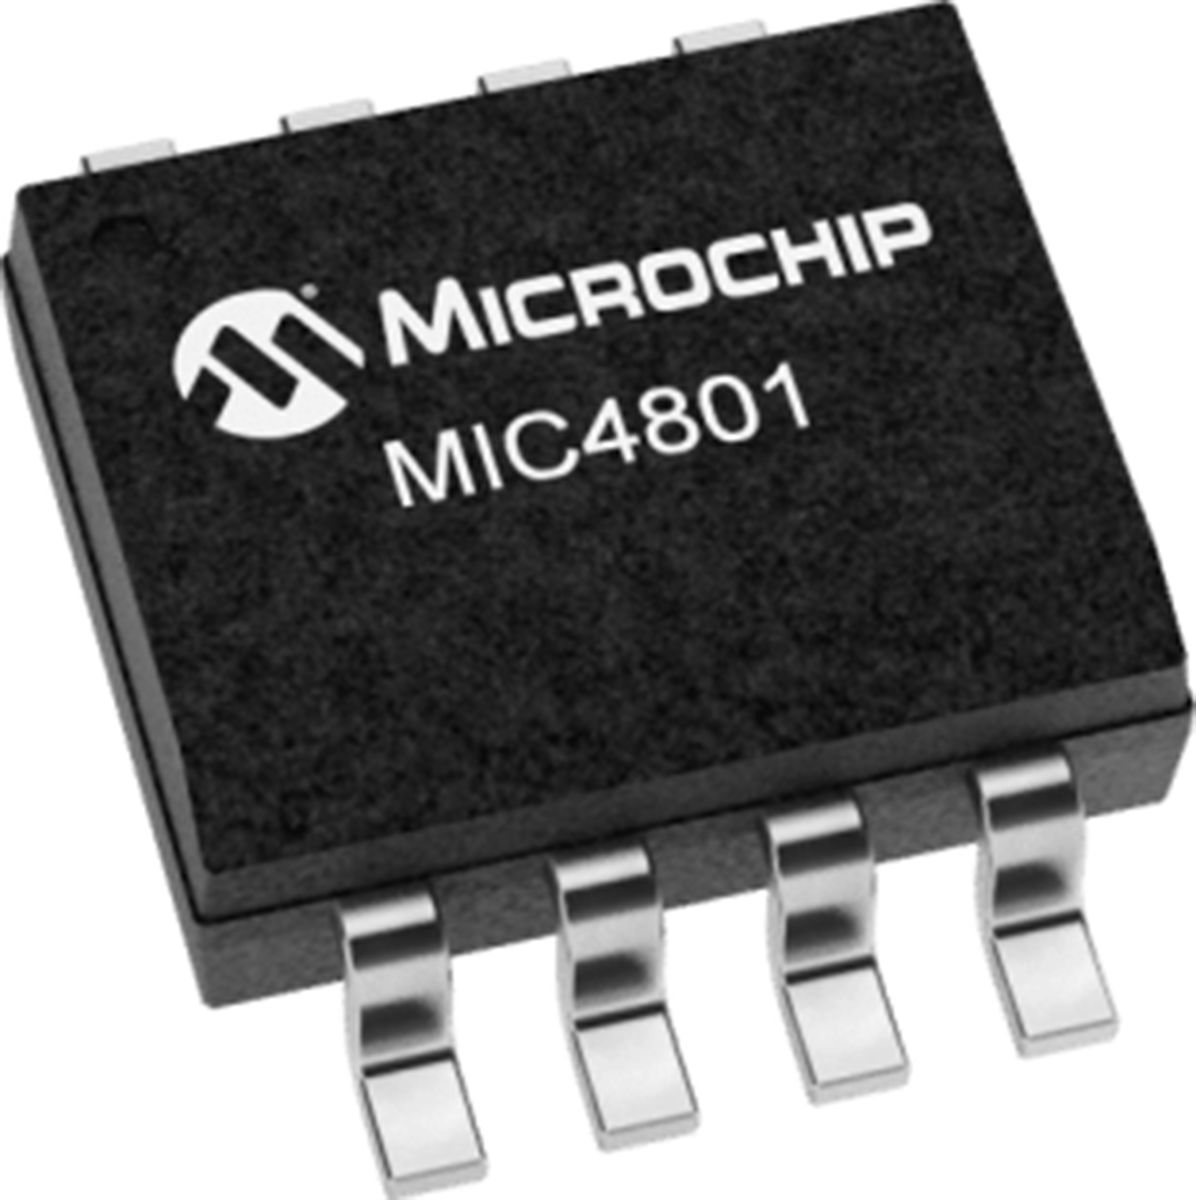 Microchip MIC4801 600mA LED-Treiber IC 3 → 5,5 V, PWM Dimmung, SOIC 8-Pin